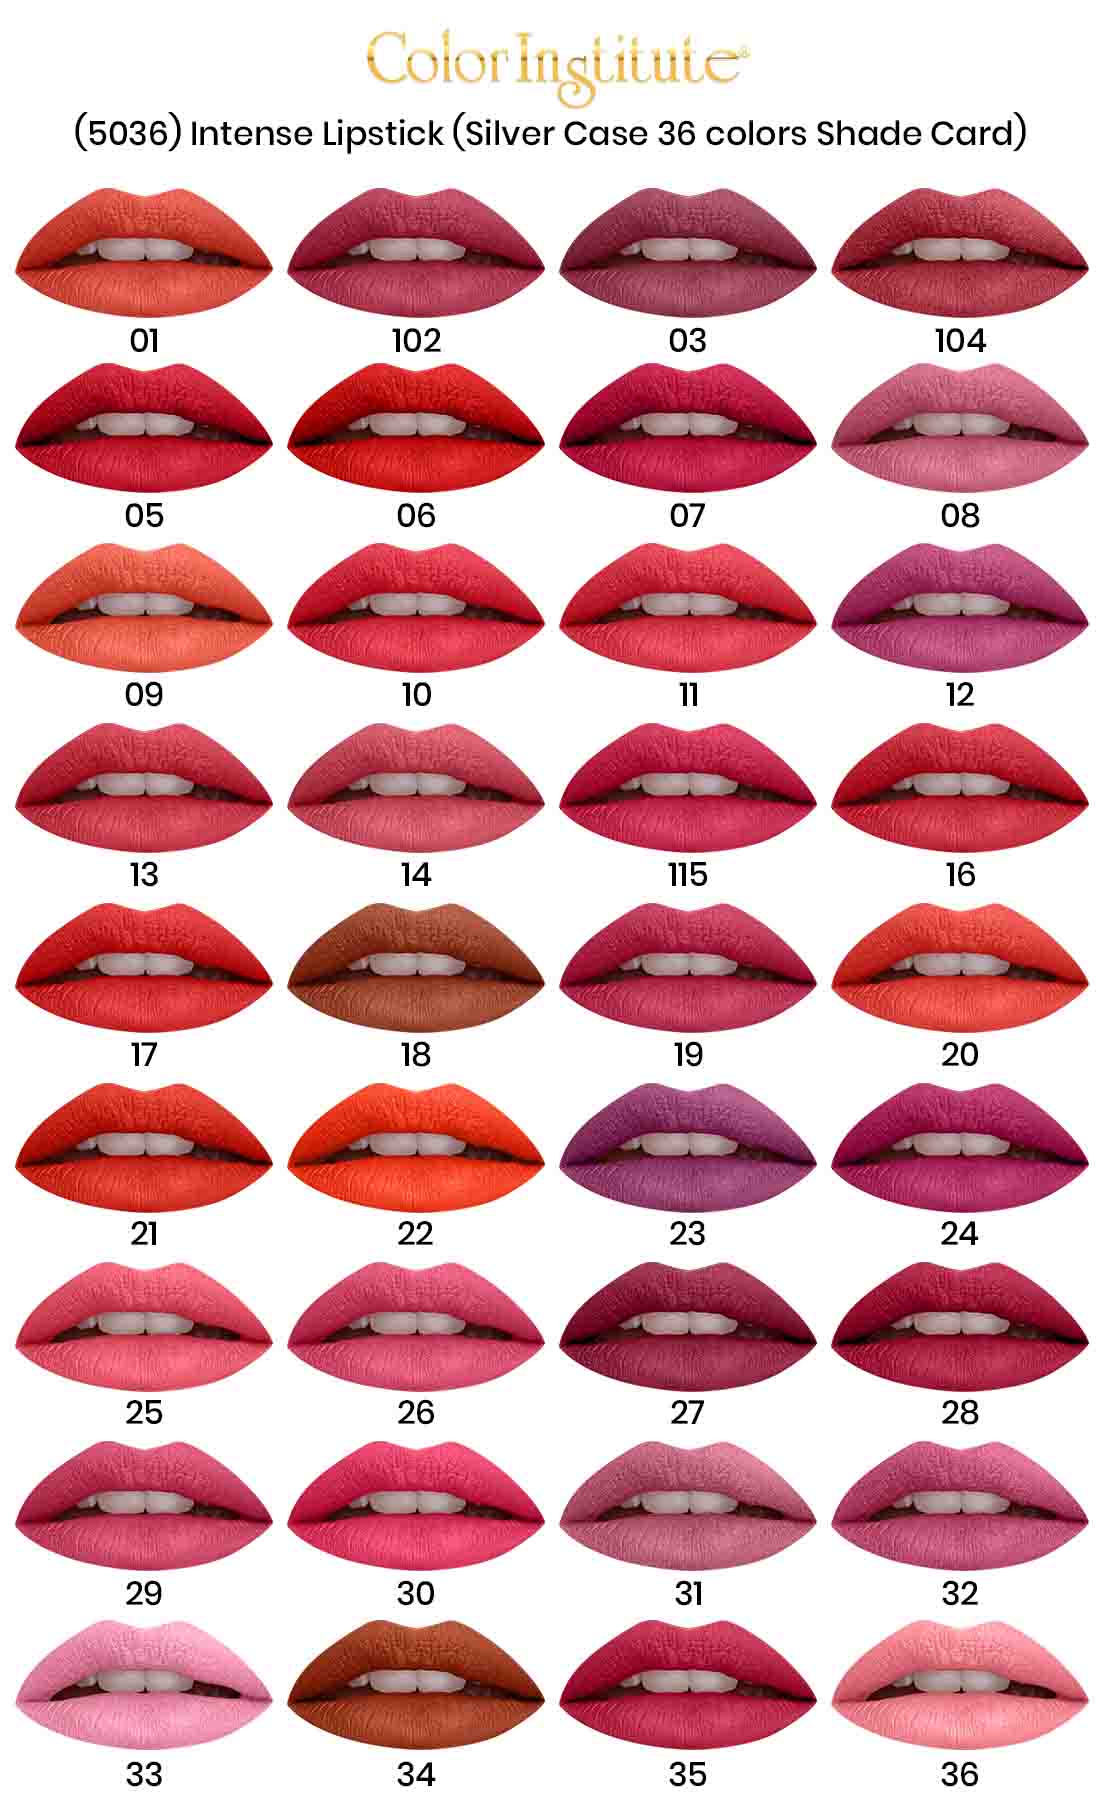 Color Institute Color Intense Lipstick (Silver Case)(36 colors)